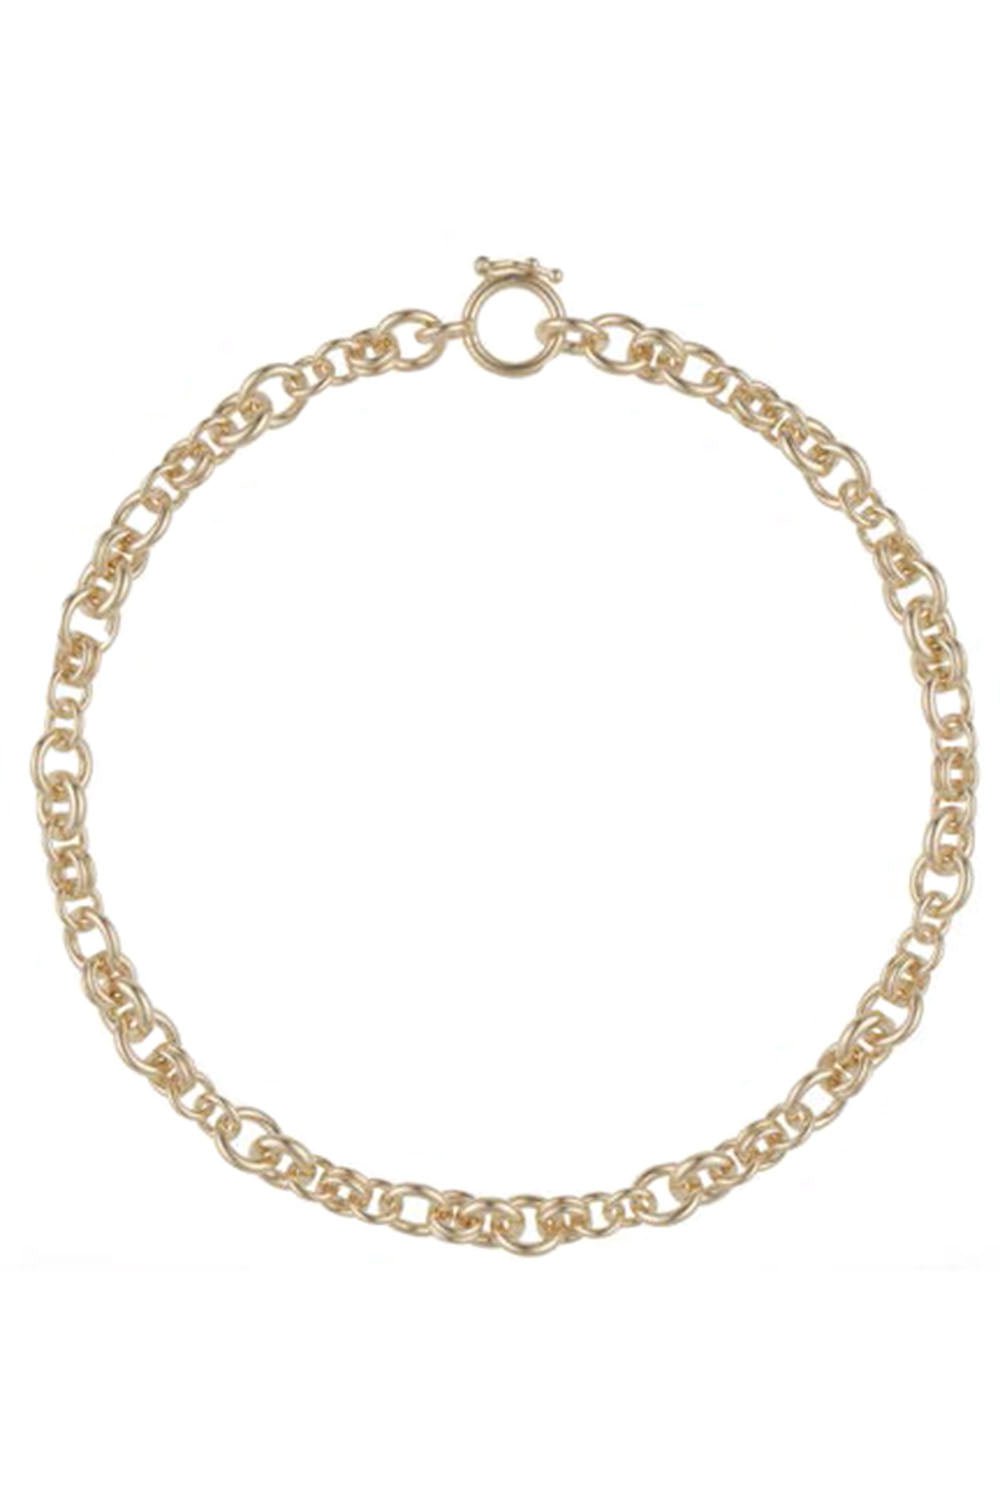 SPINELLI KILCOLLIN-Helio YG Chain Bracelet-YELLOW GOLD